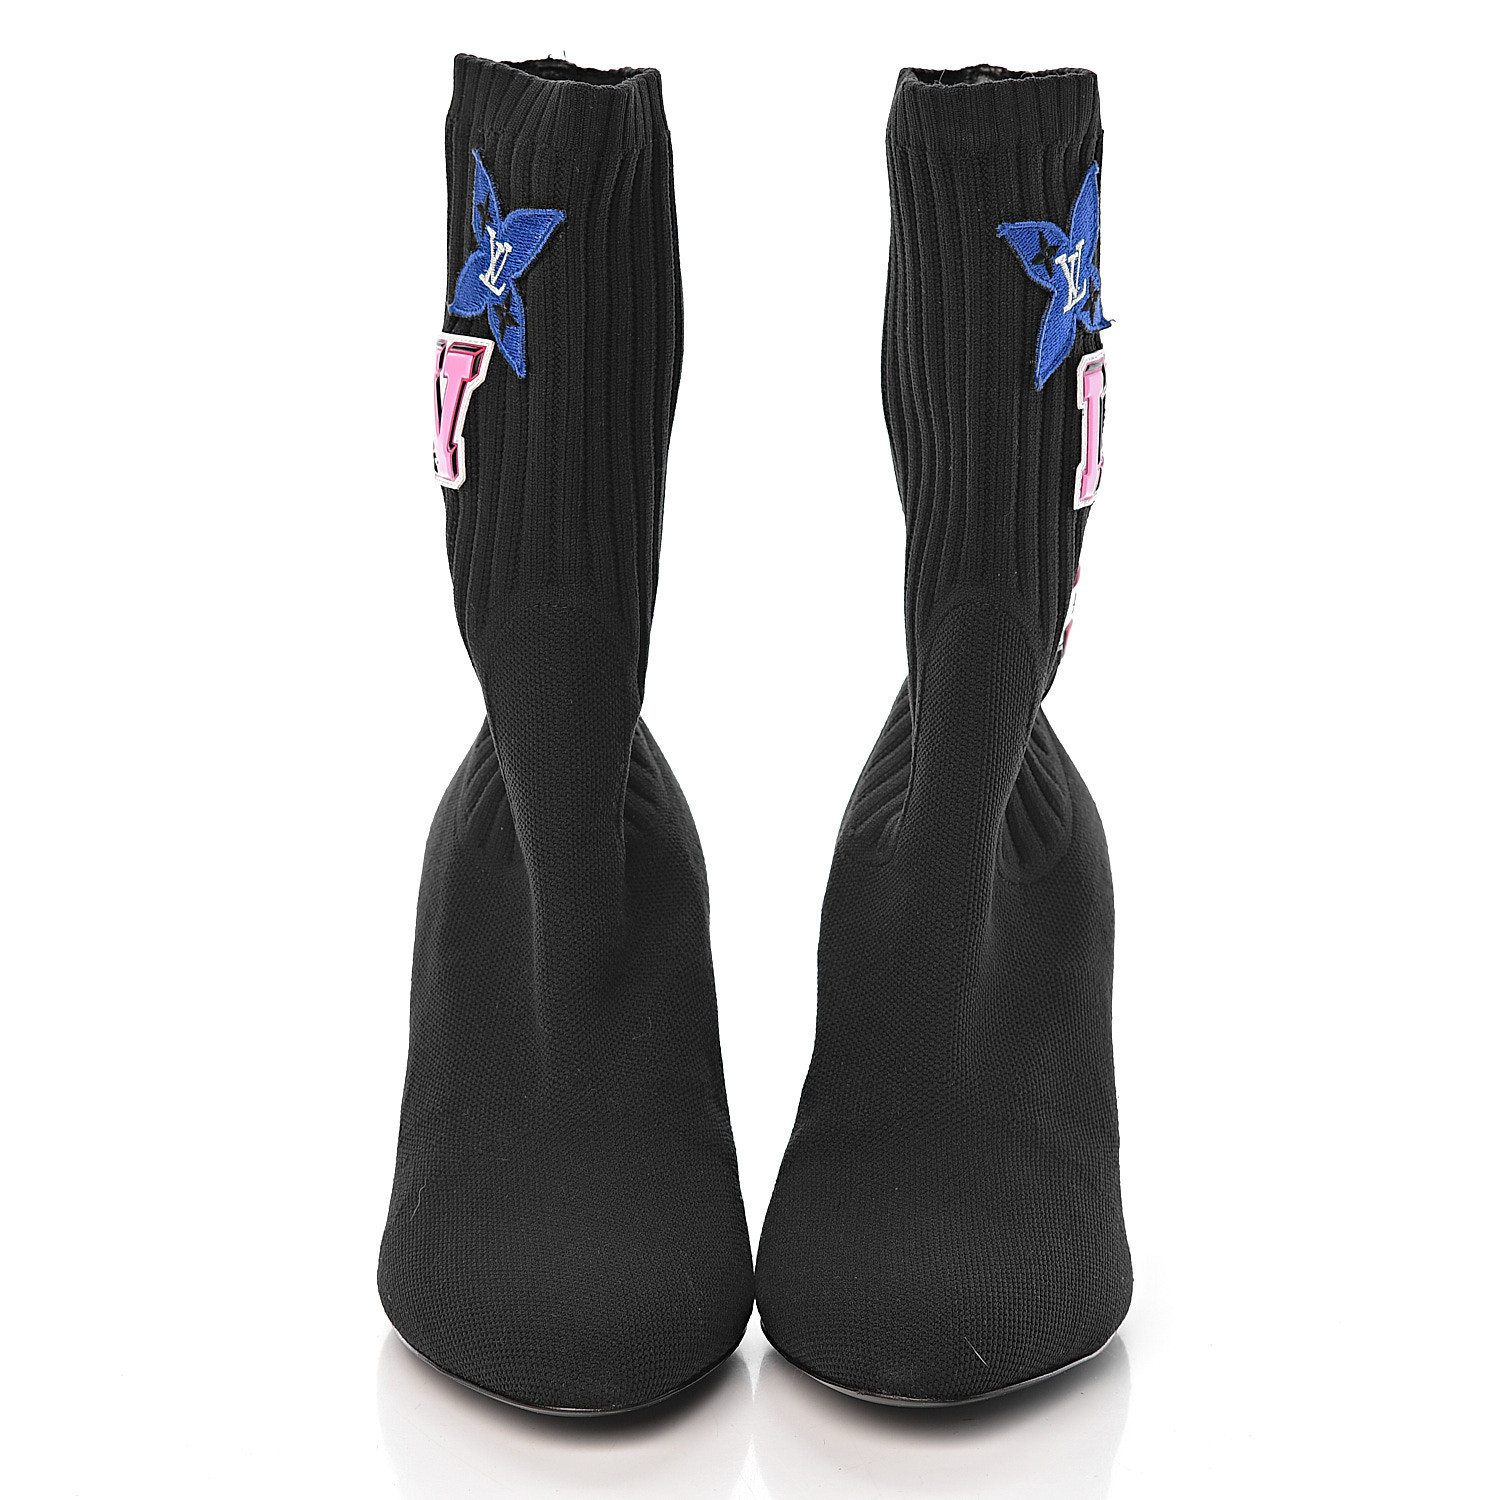 RUSH SALE!!! LV Black Sock Sneaker/ 100% authentic! Super bago pa